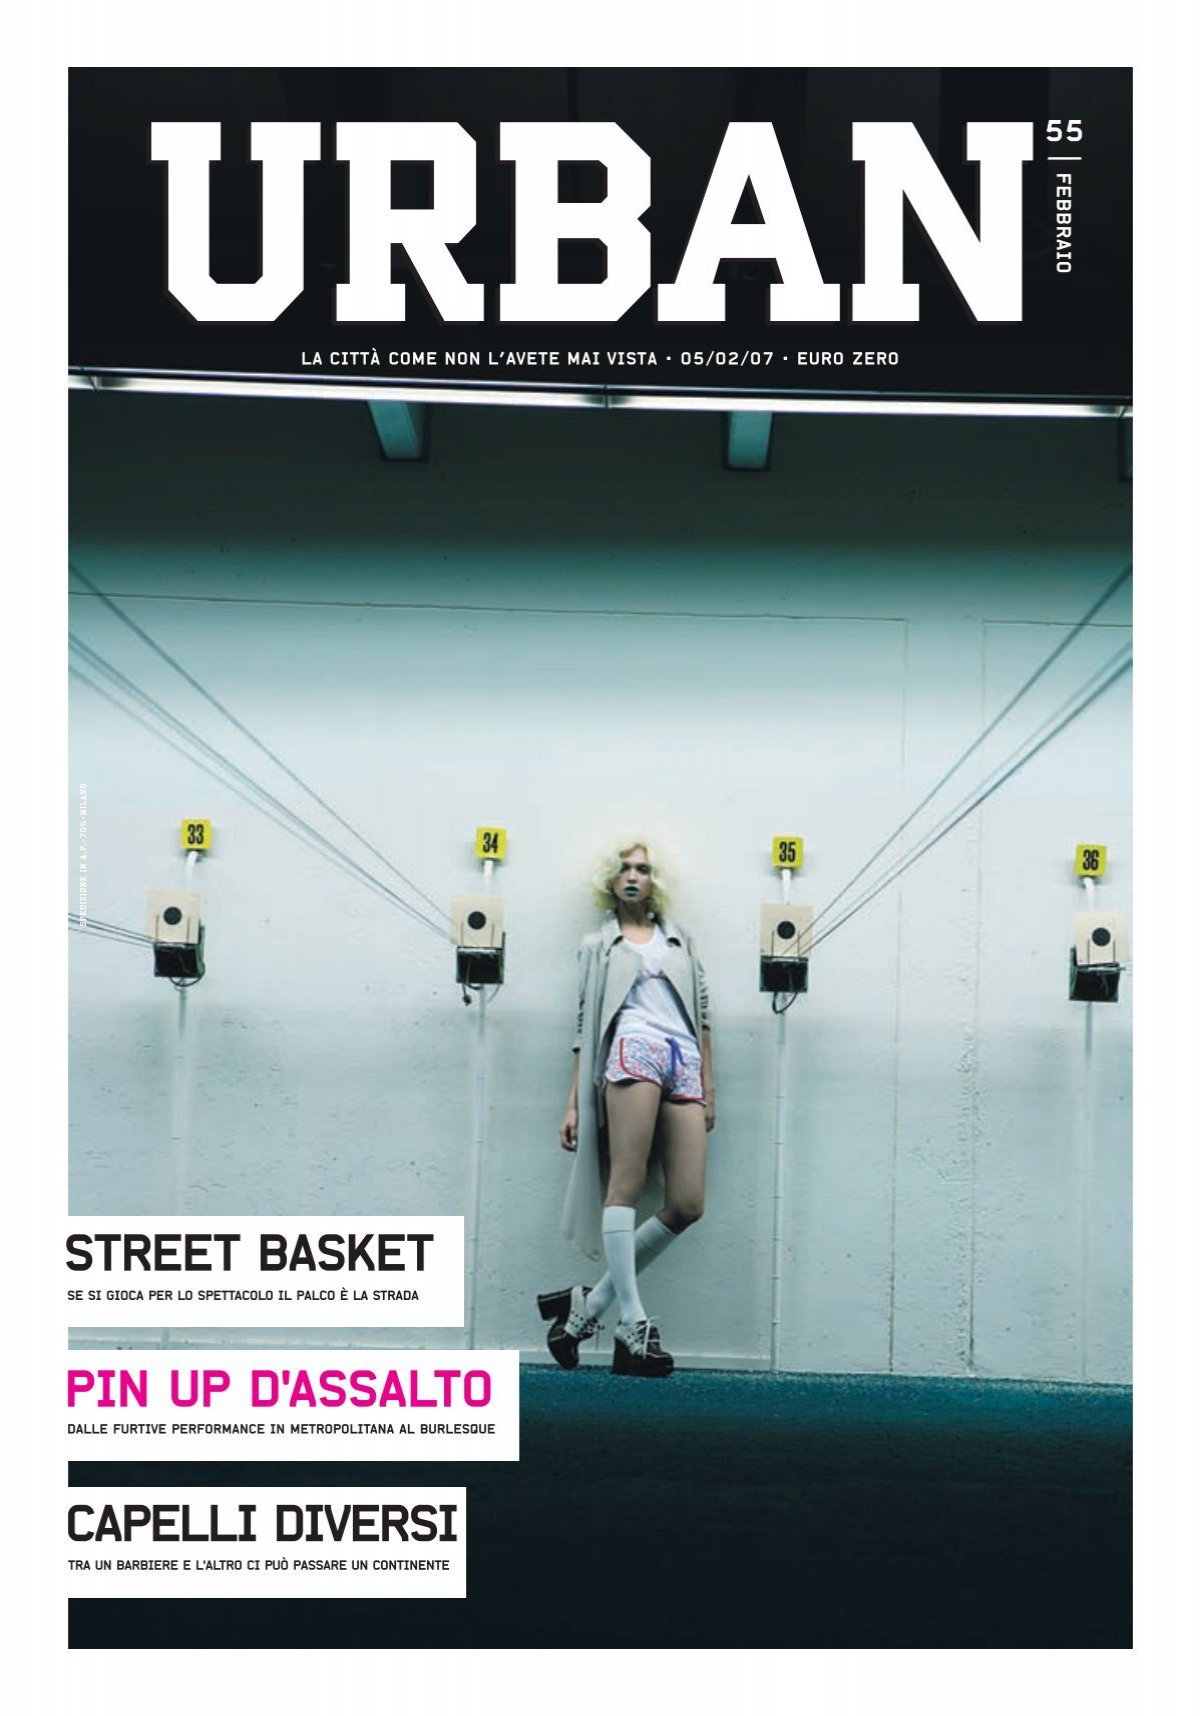 PIN UP D'ASSALTO CAPELLI DIVERSI STREET BASKET - Urban